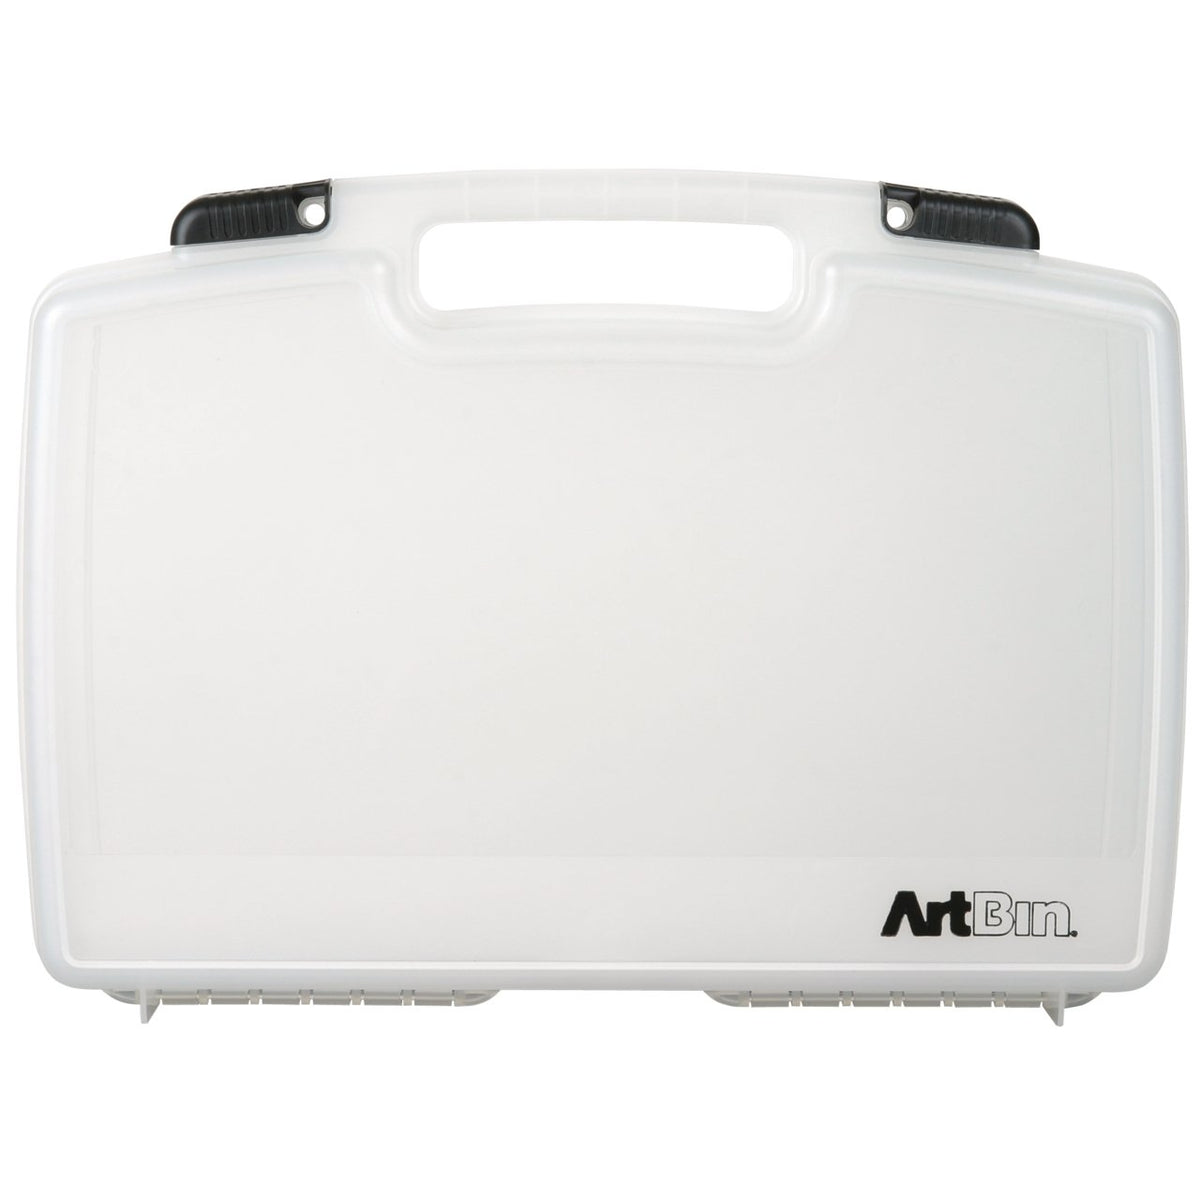 Artbin Quickview Case 17 inchw x 12.375 inch x 3.875 inch - merriartist.com